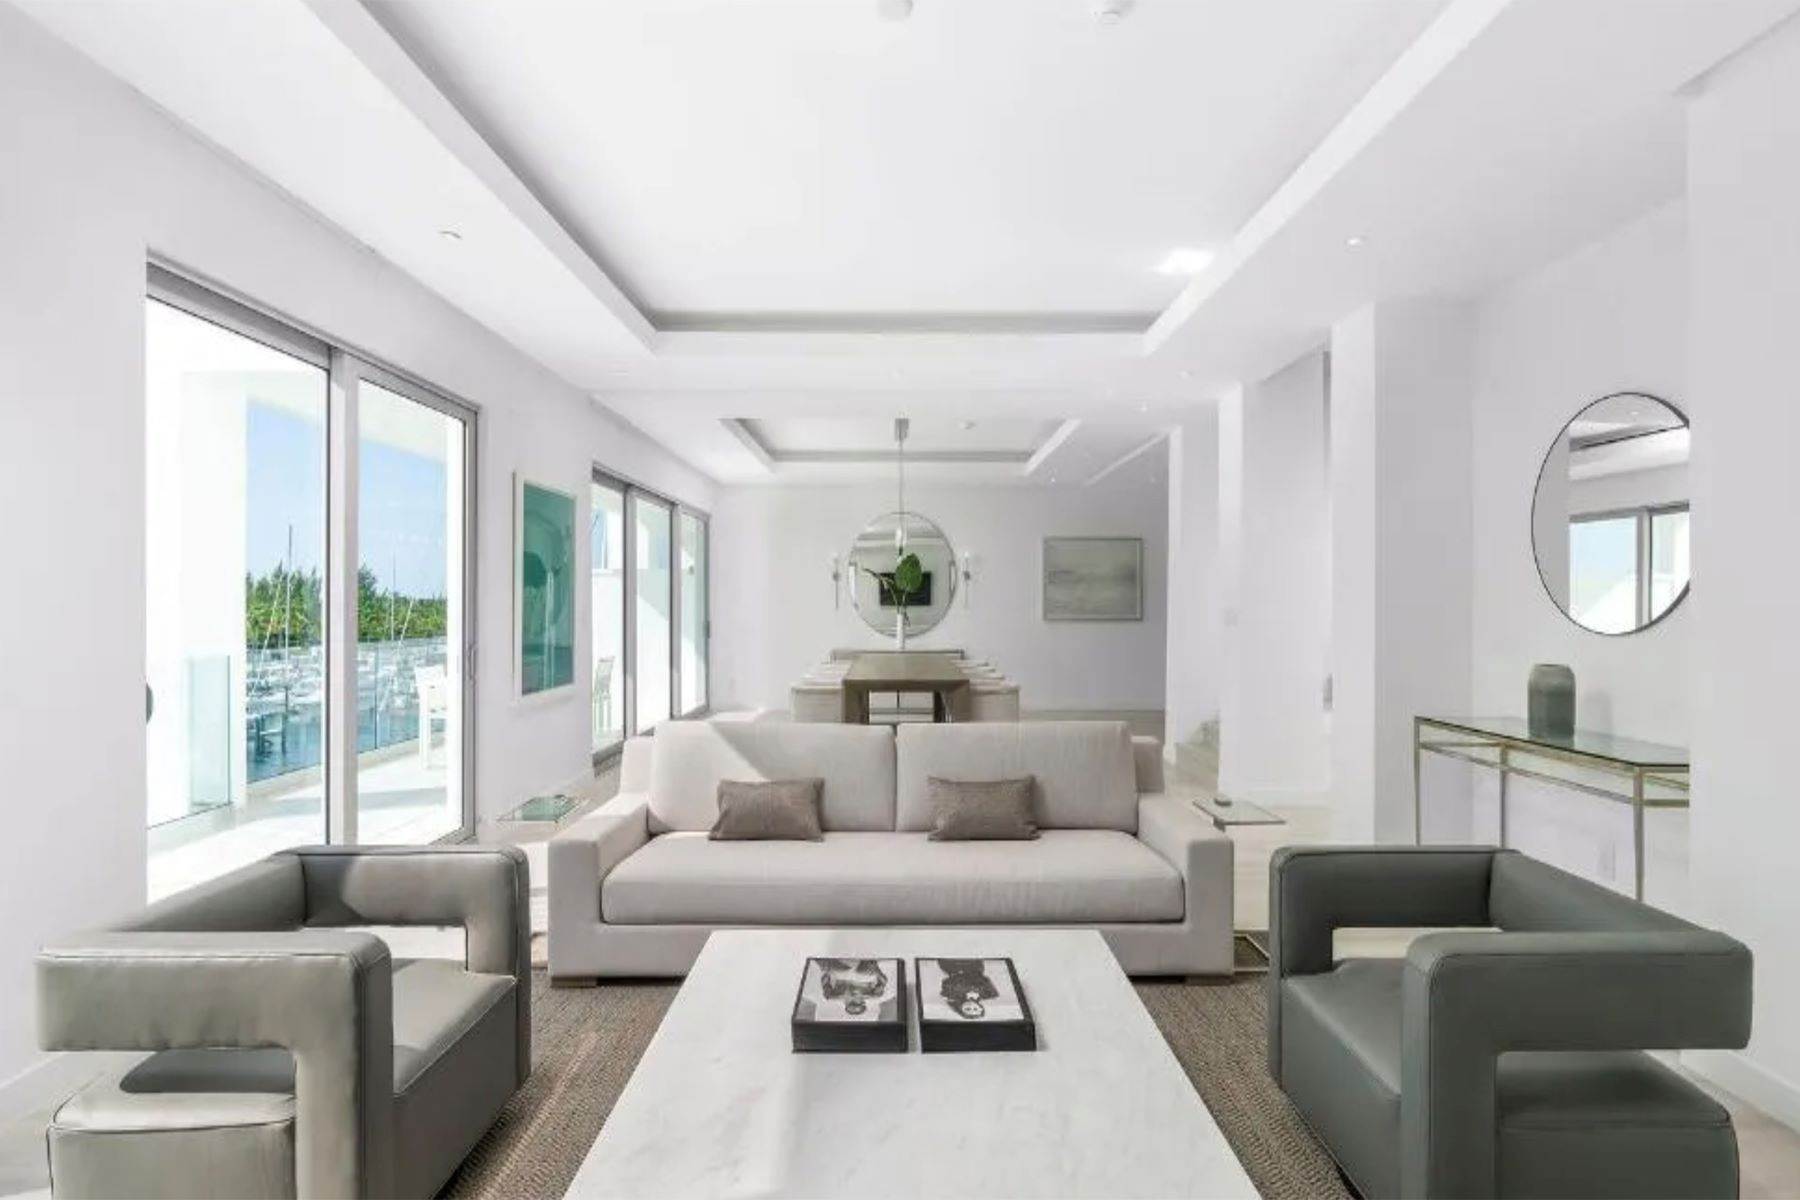 2. Condominiums for Sale at Palm Cay, Yamacraw, Nassau and Paradise Island, Bahamas